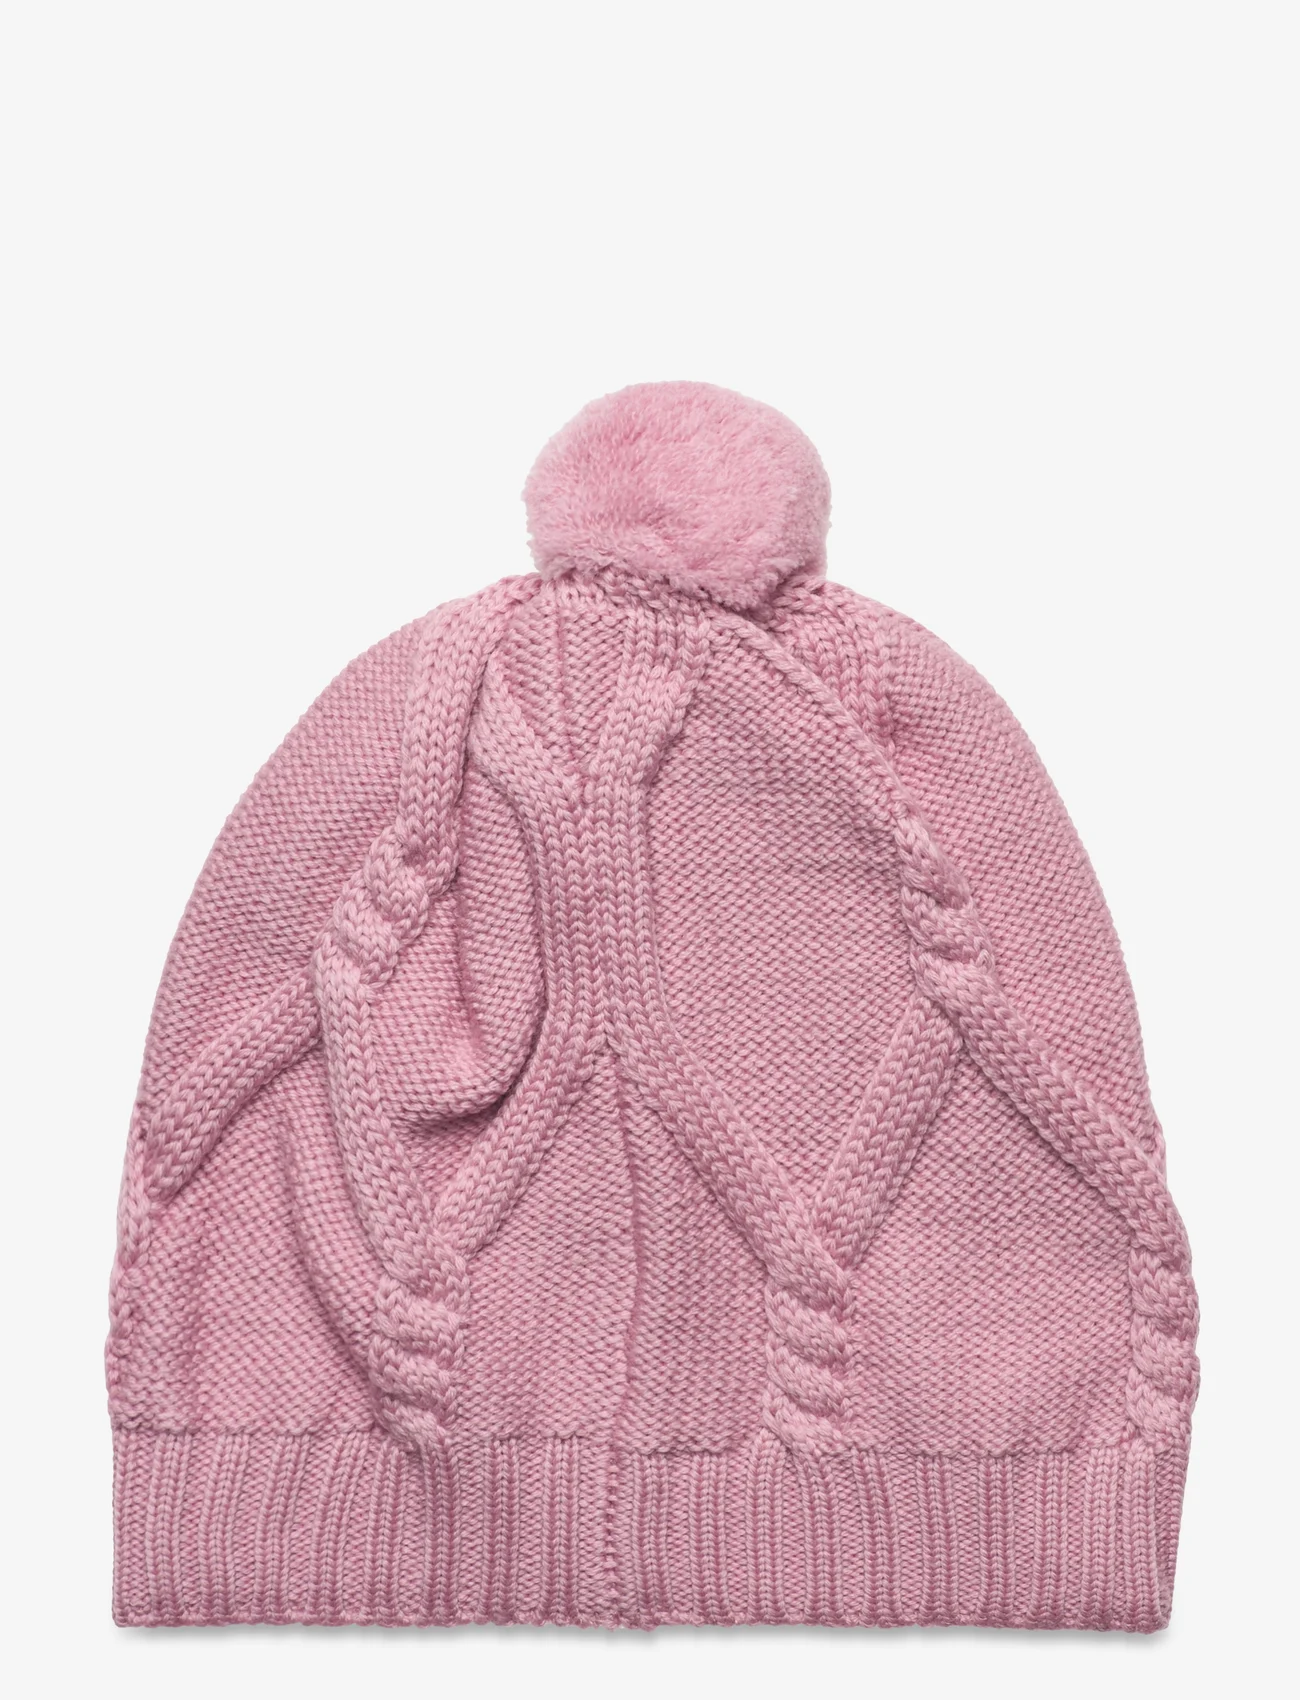 Reima - Beanie, Talvinen - winter hats - grey pink - 1